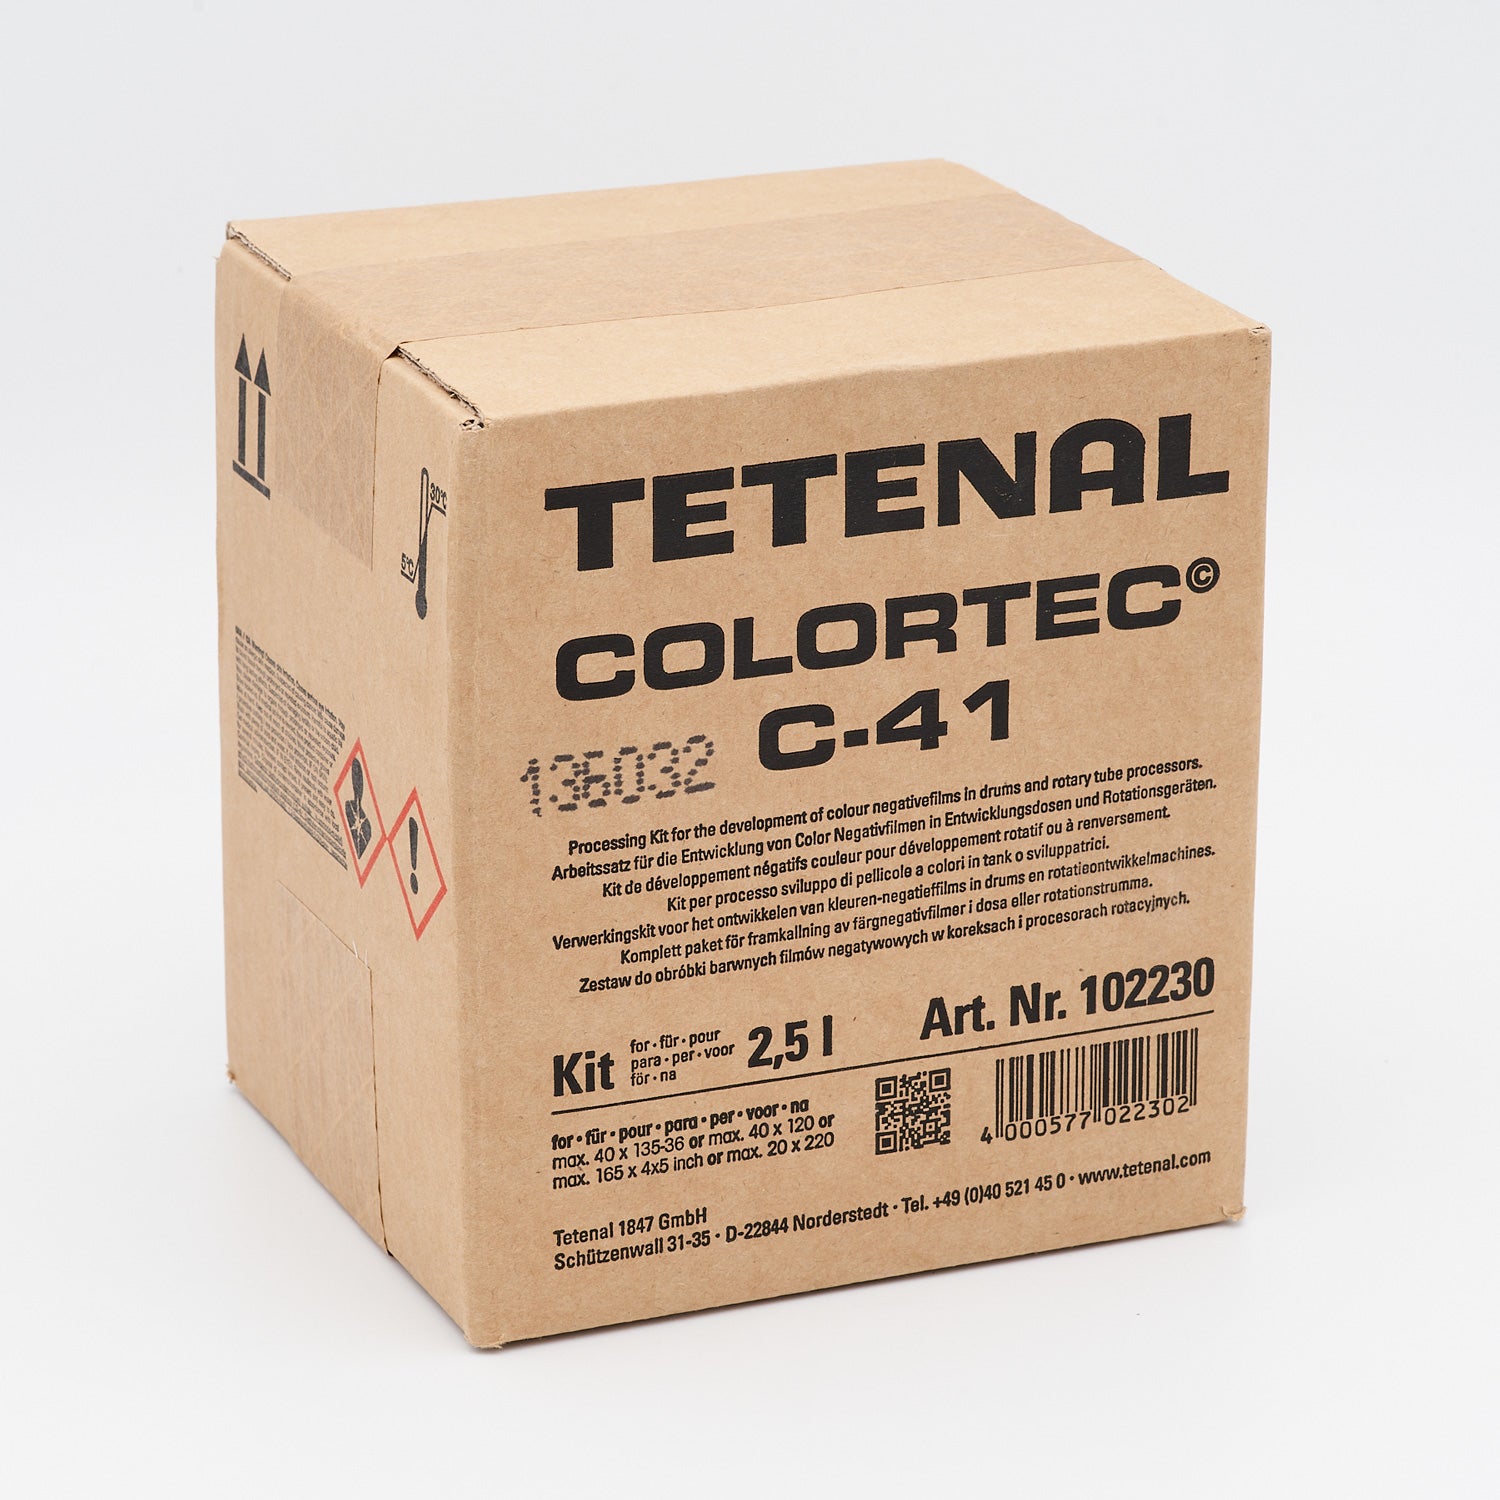 TETENAL Colortec C-41 Kit Rapid 2-Bad 2,5 Liter